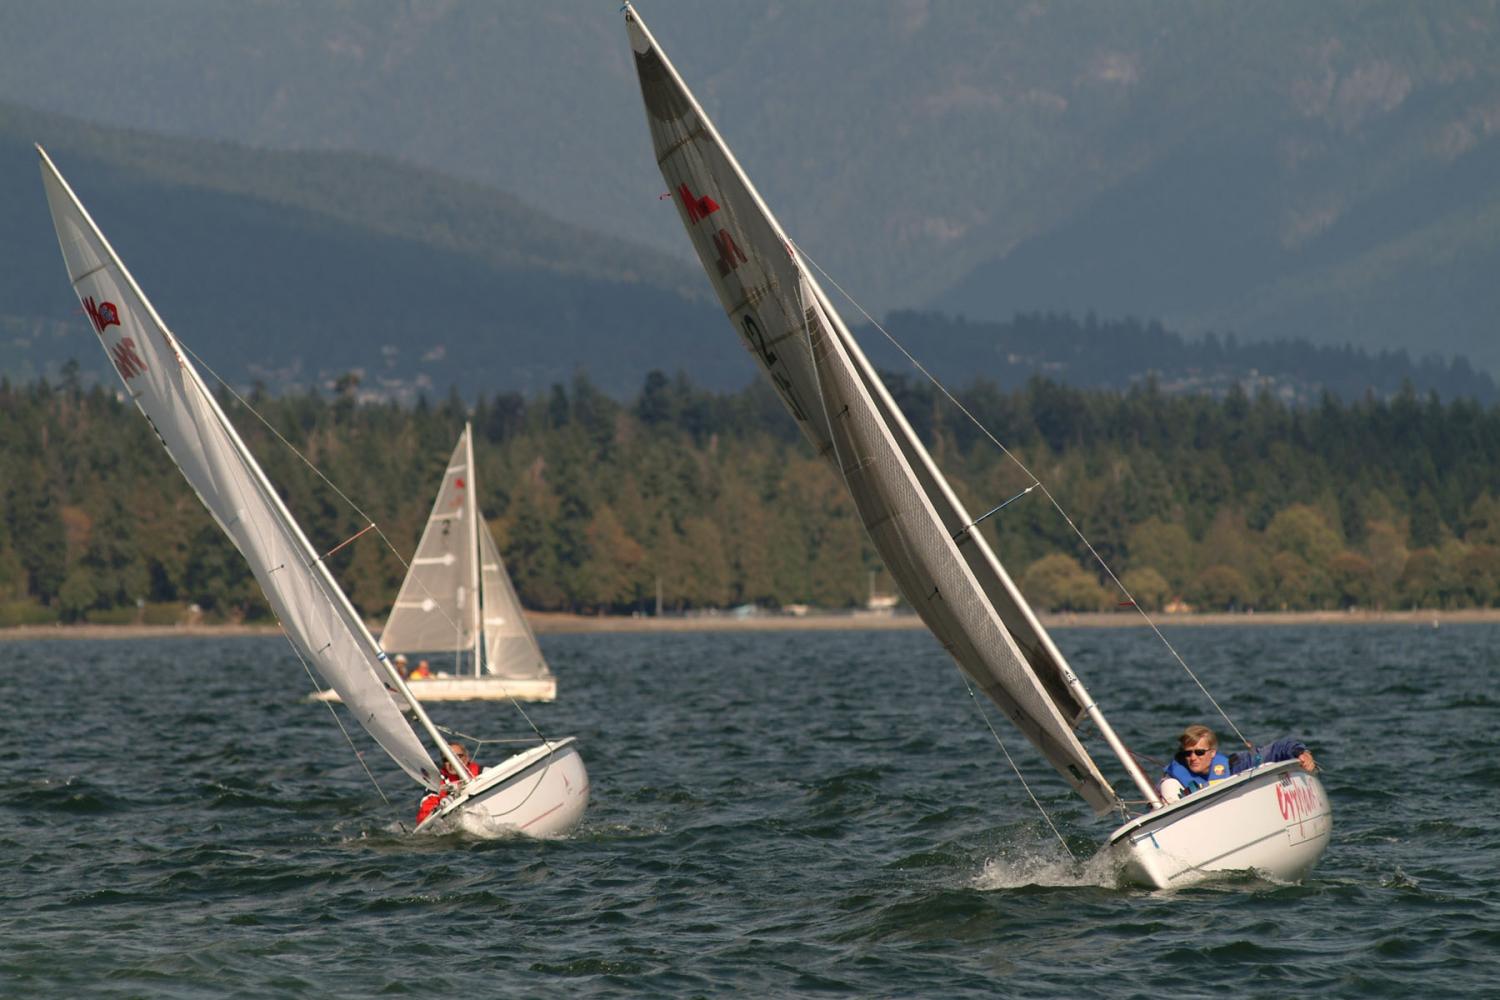 Two men racing in sailboats